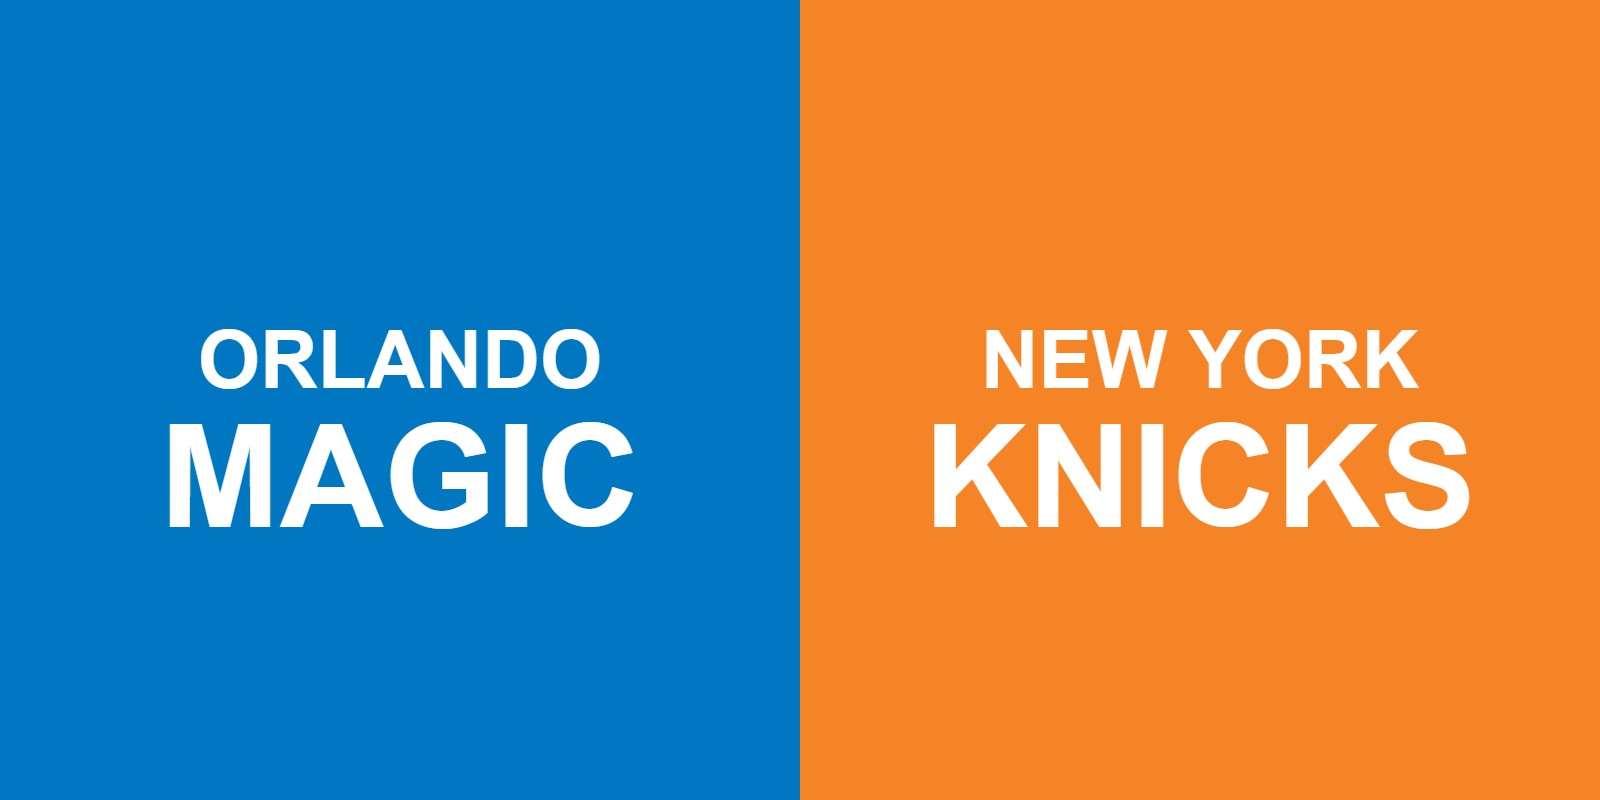 Magic vs Knicks